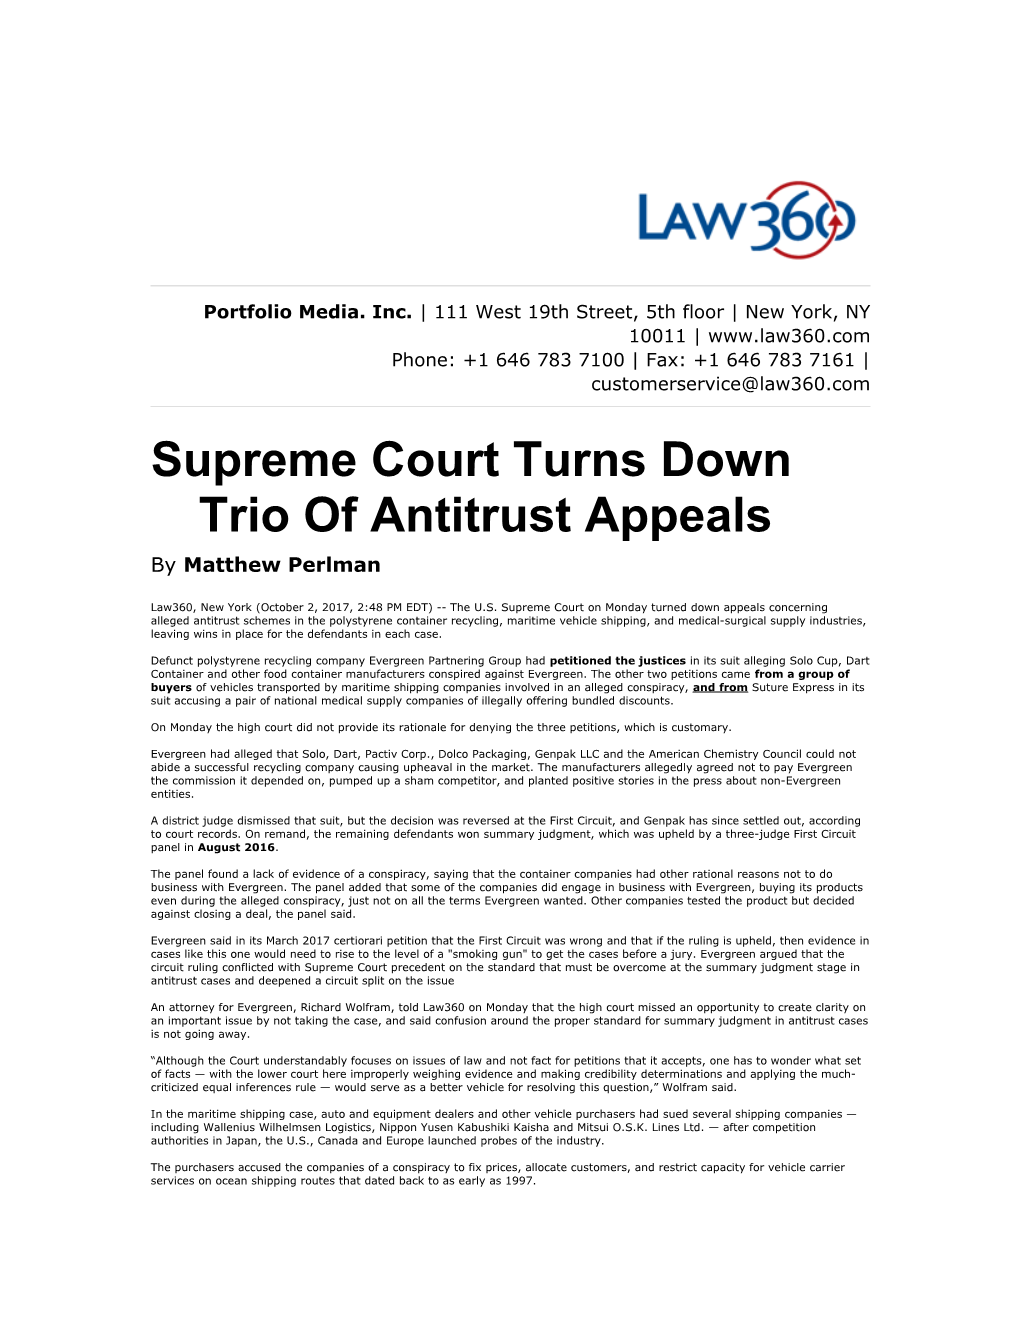 Supreme Court Turns Down Trio of Antitrust Appeals